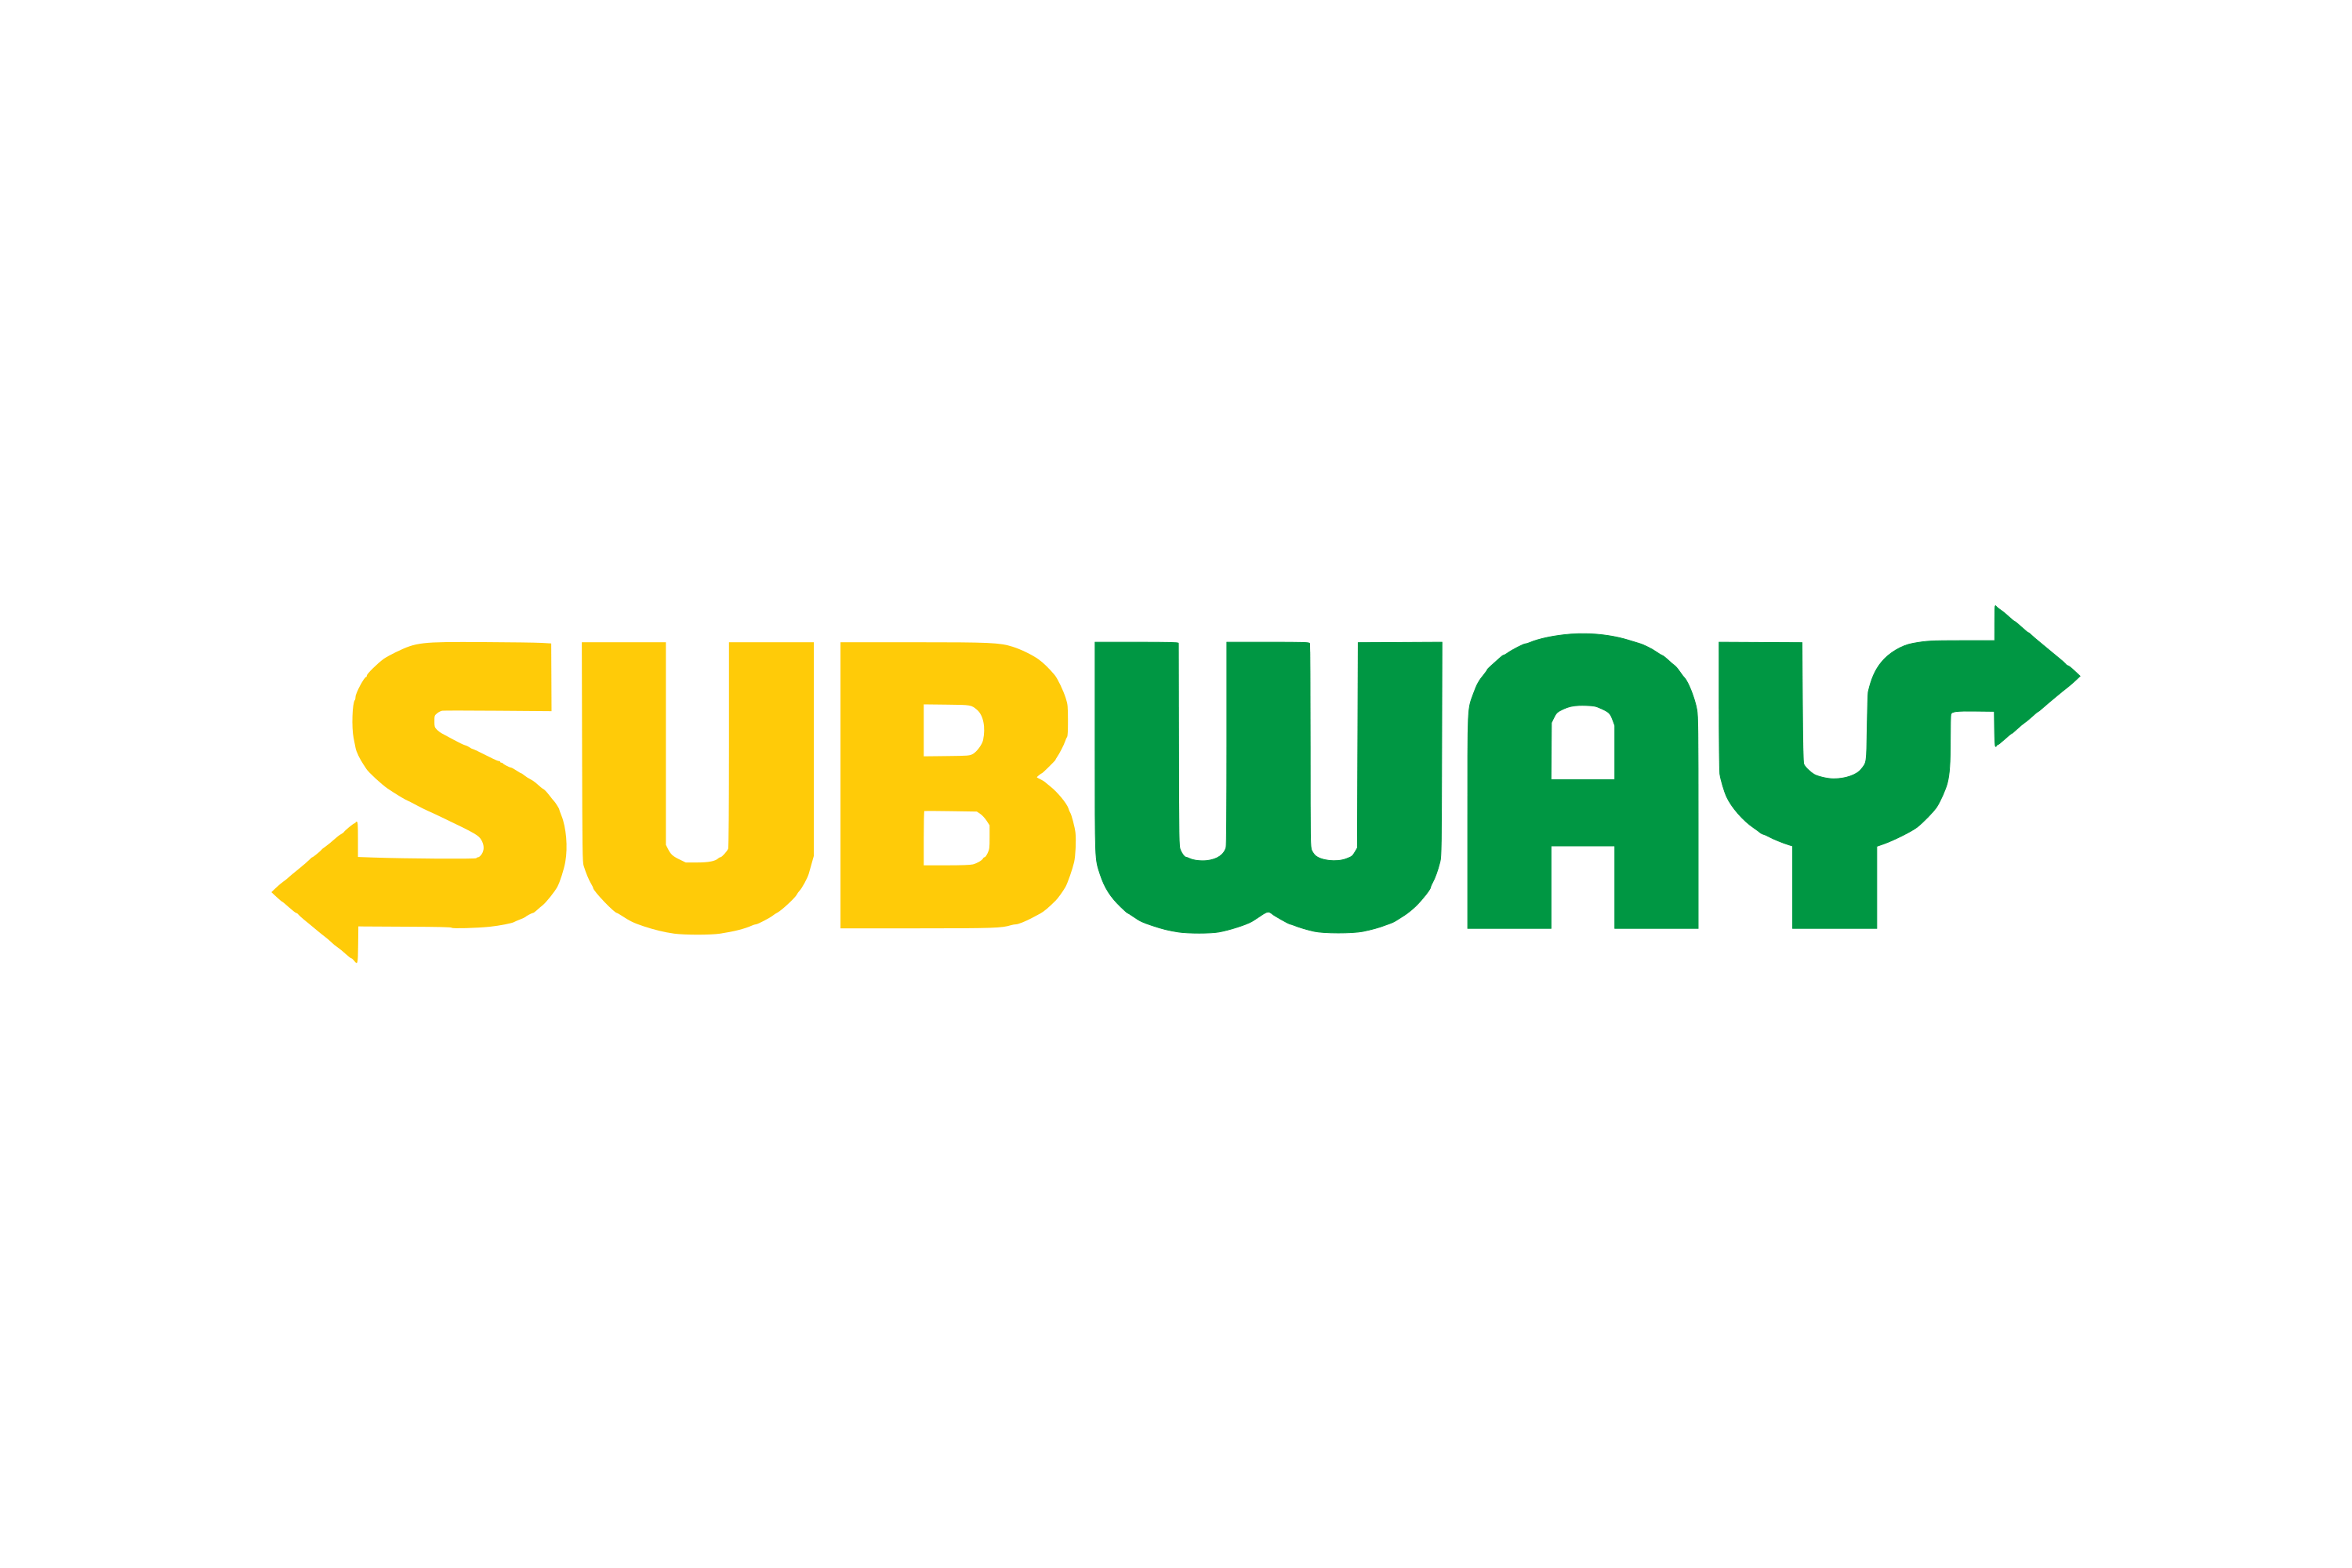 Subway Logo No Background - S